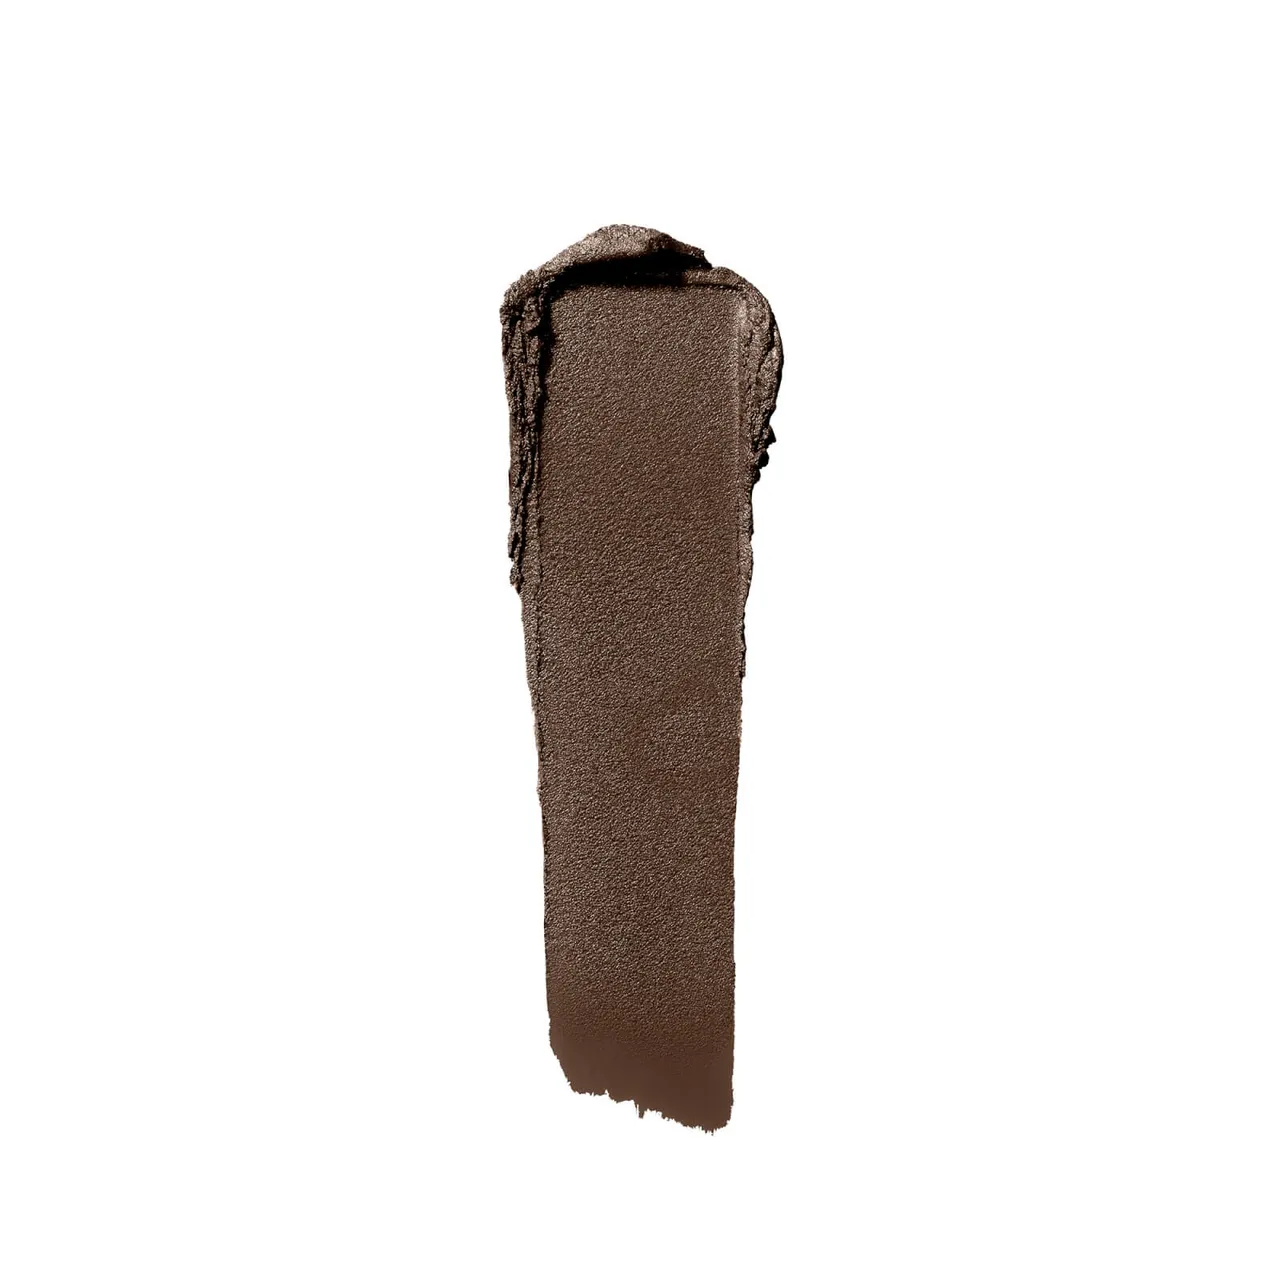 Bobbi Brown Long-Wear Cream Shadow Stick (Various Shades) - Bark